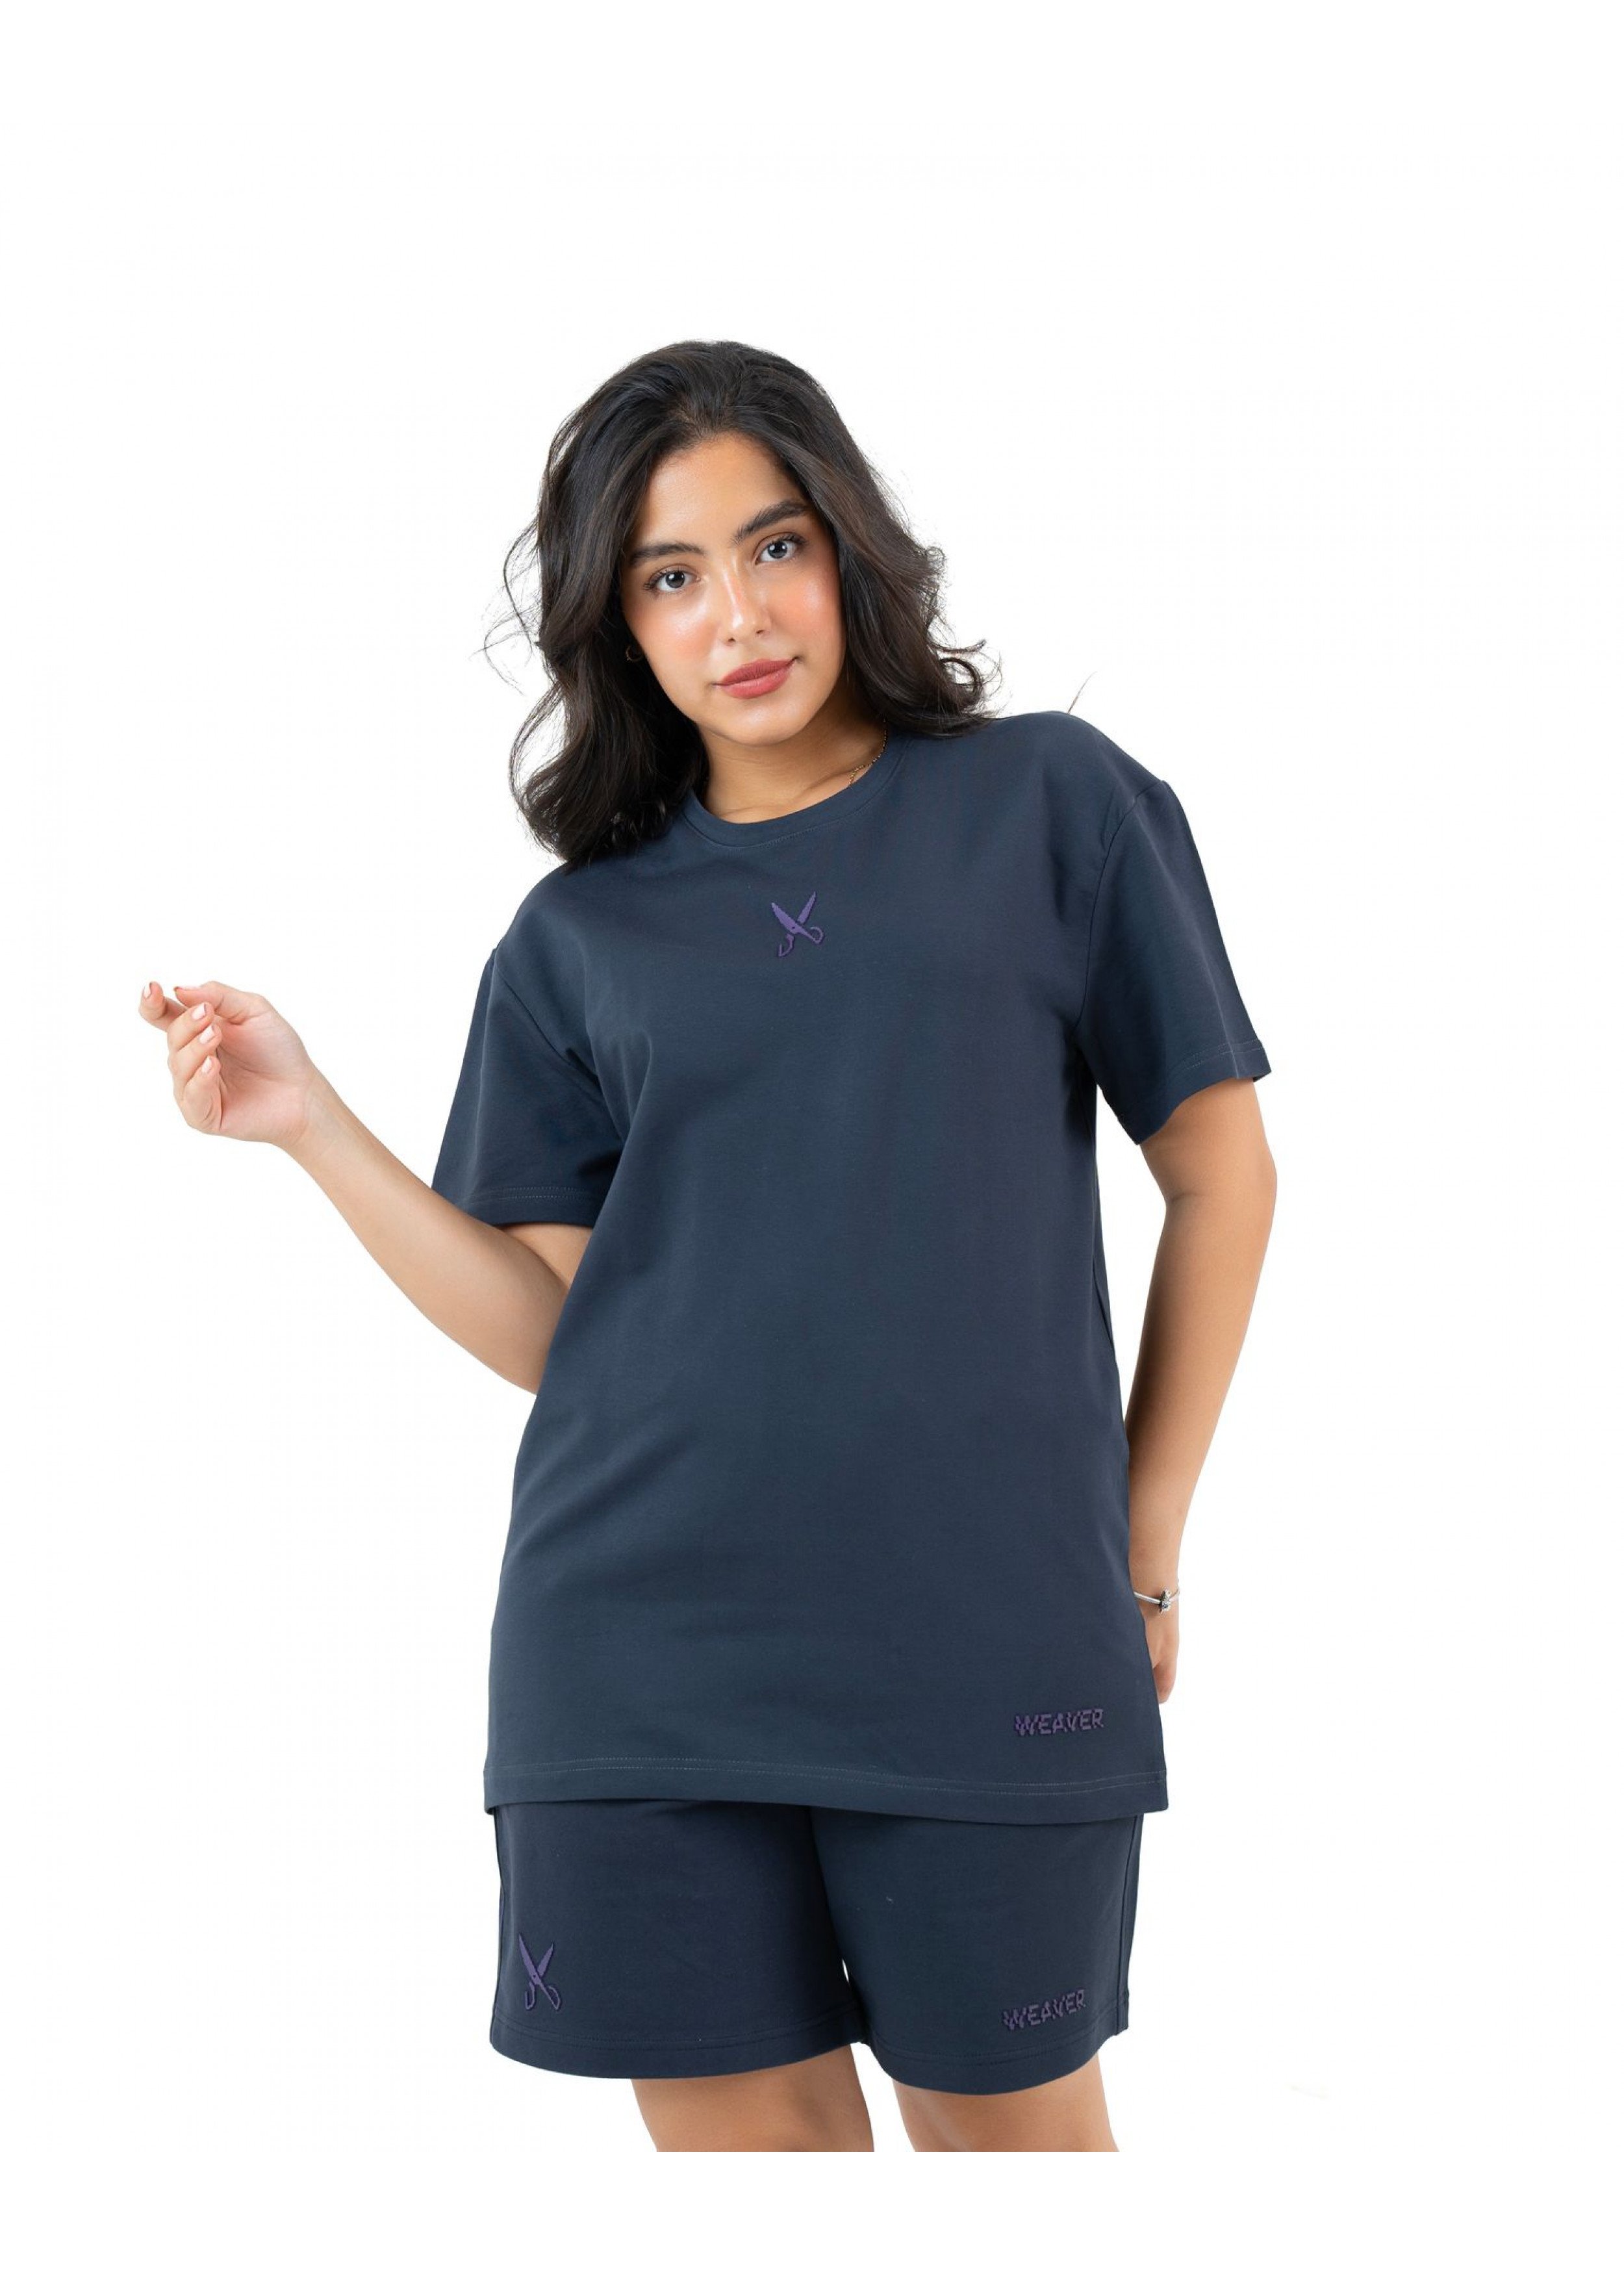 Plain T-shirt with zigzag logo - Gray